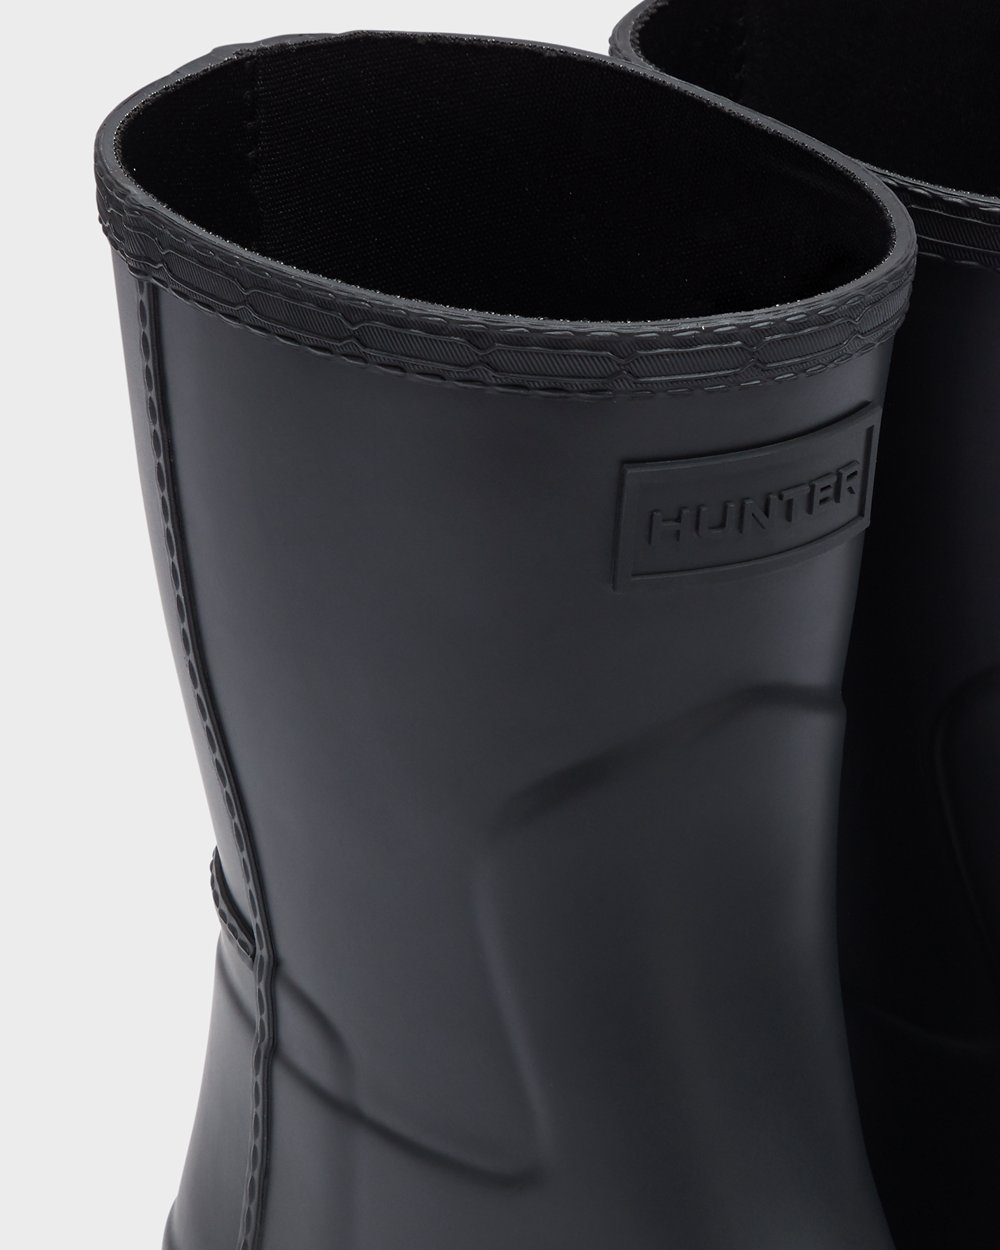 Womens Short Rain Boots - Hunter Refined Stitch Detail (94AVWQHGJ) - Black